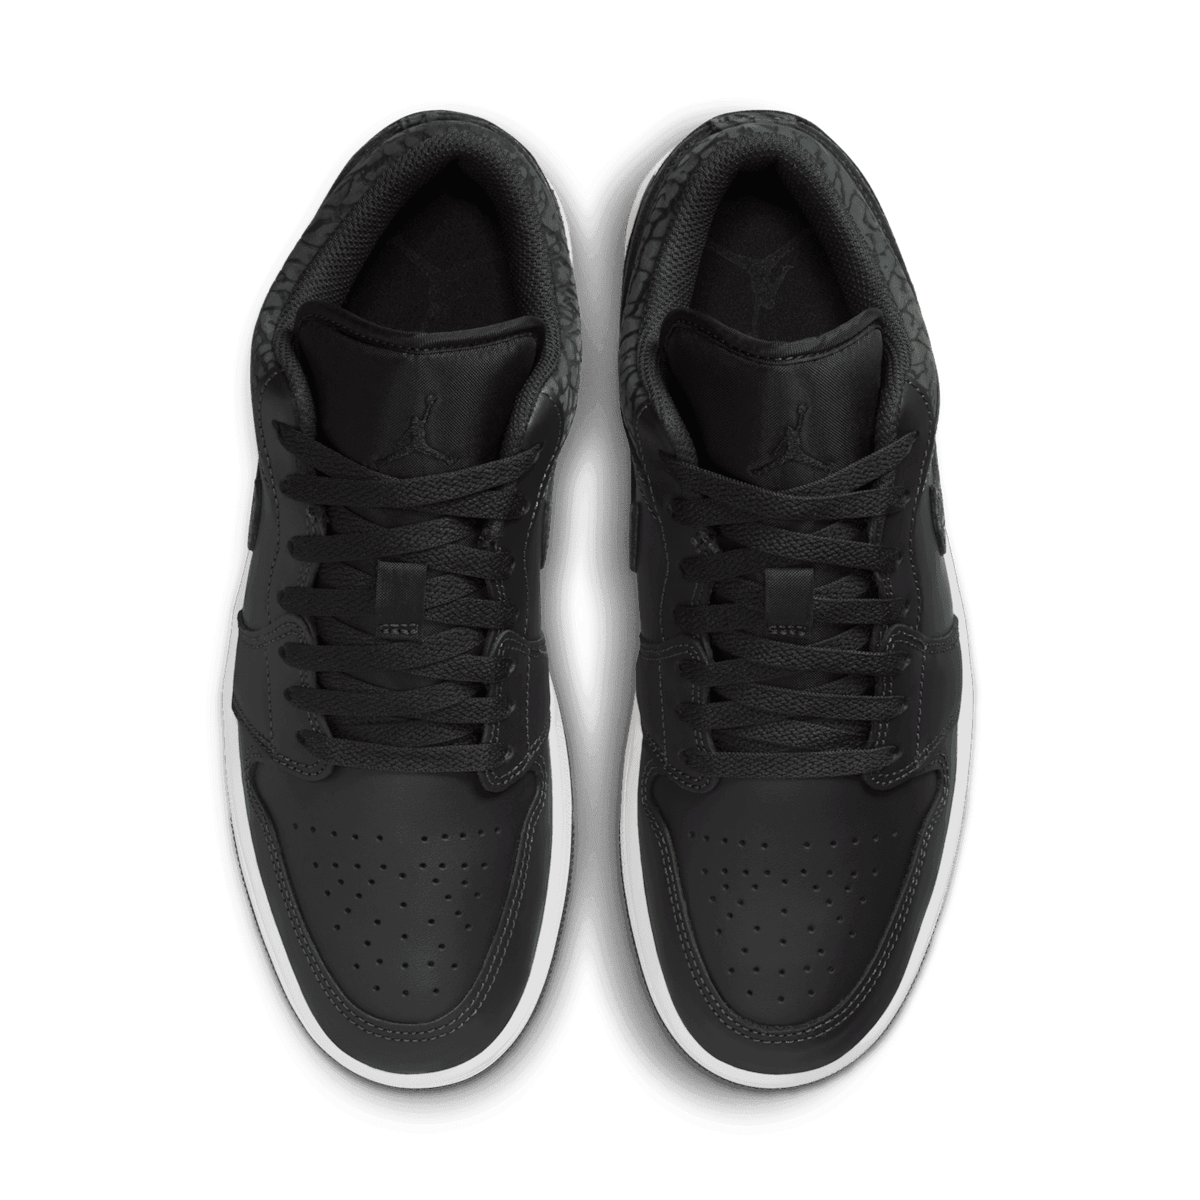 The Air Jordan 1 Low SE Features Black Elephant Print